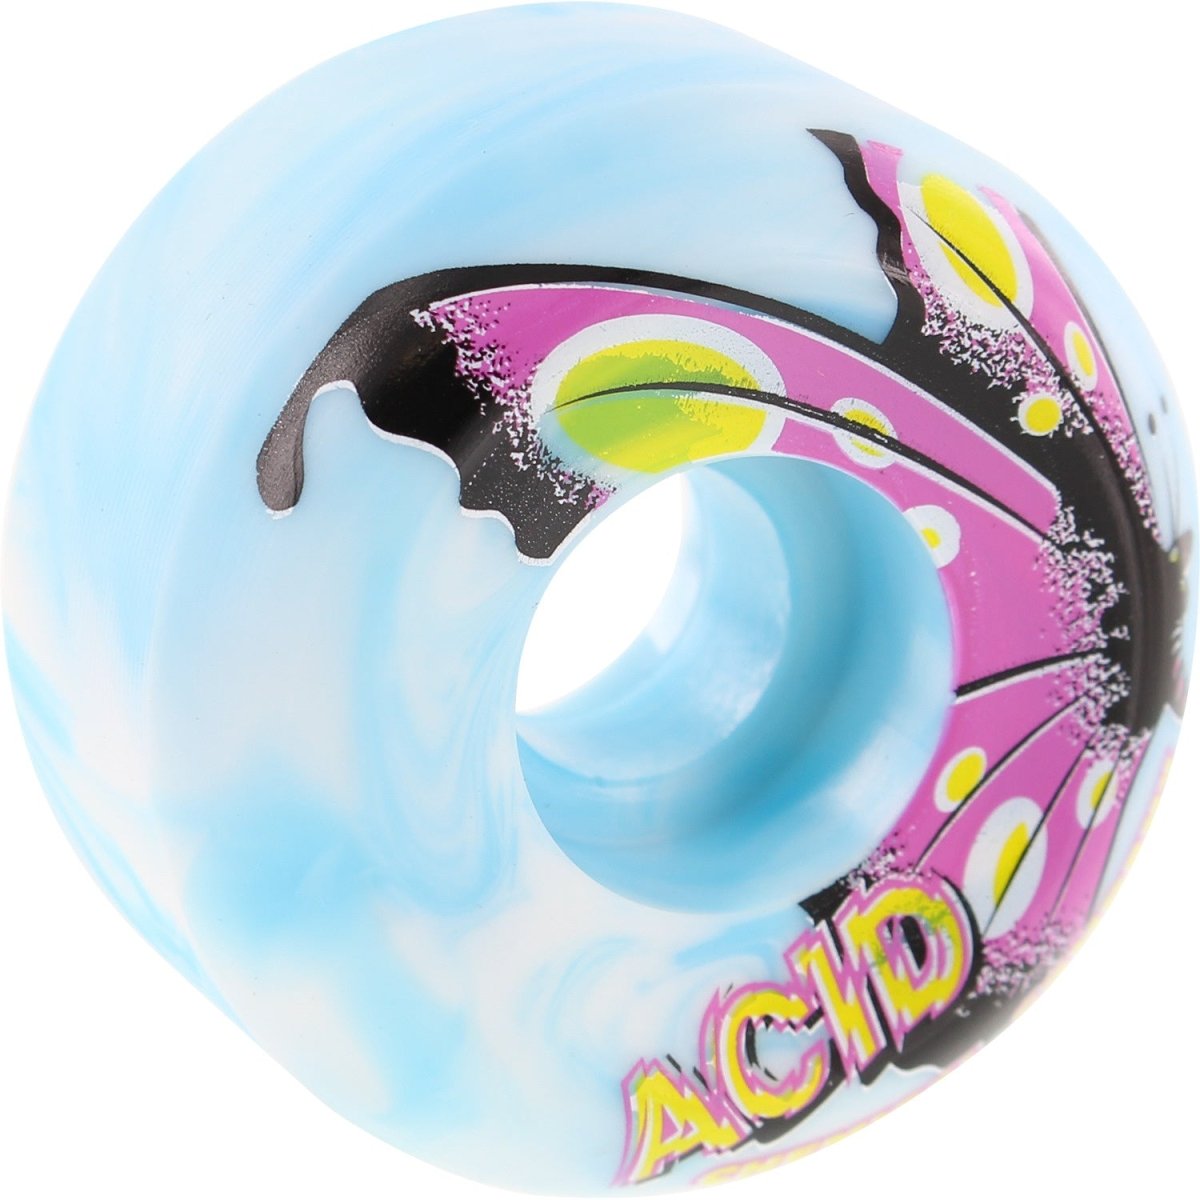 Acid 99a Type A Sidecut Butterfly 53mm (Blue/White)